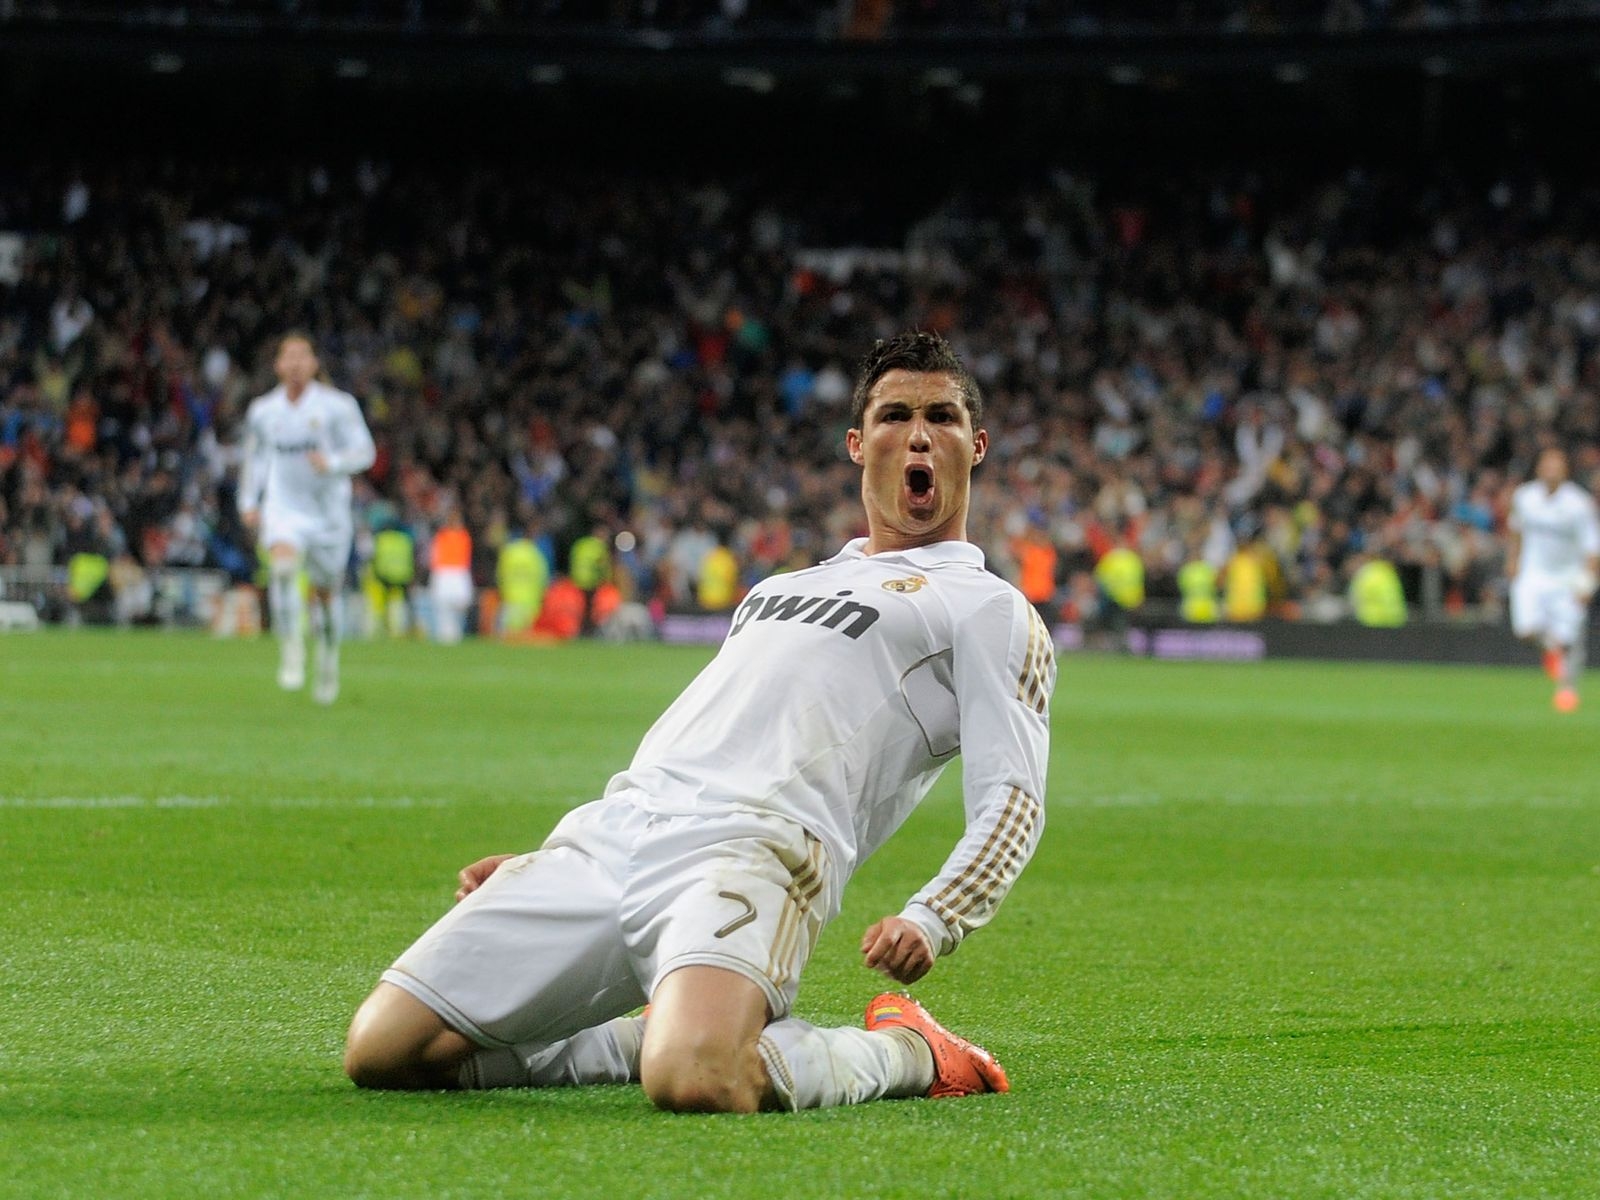 Cristiano Ronaldo Celebrating for 1600 x 1200 resolution